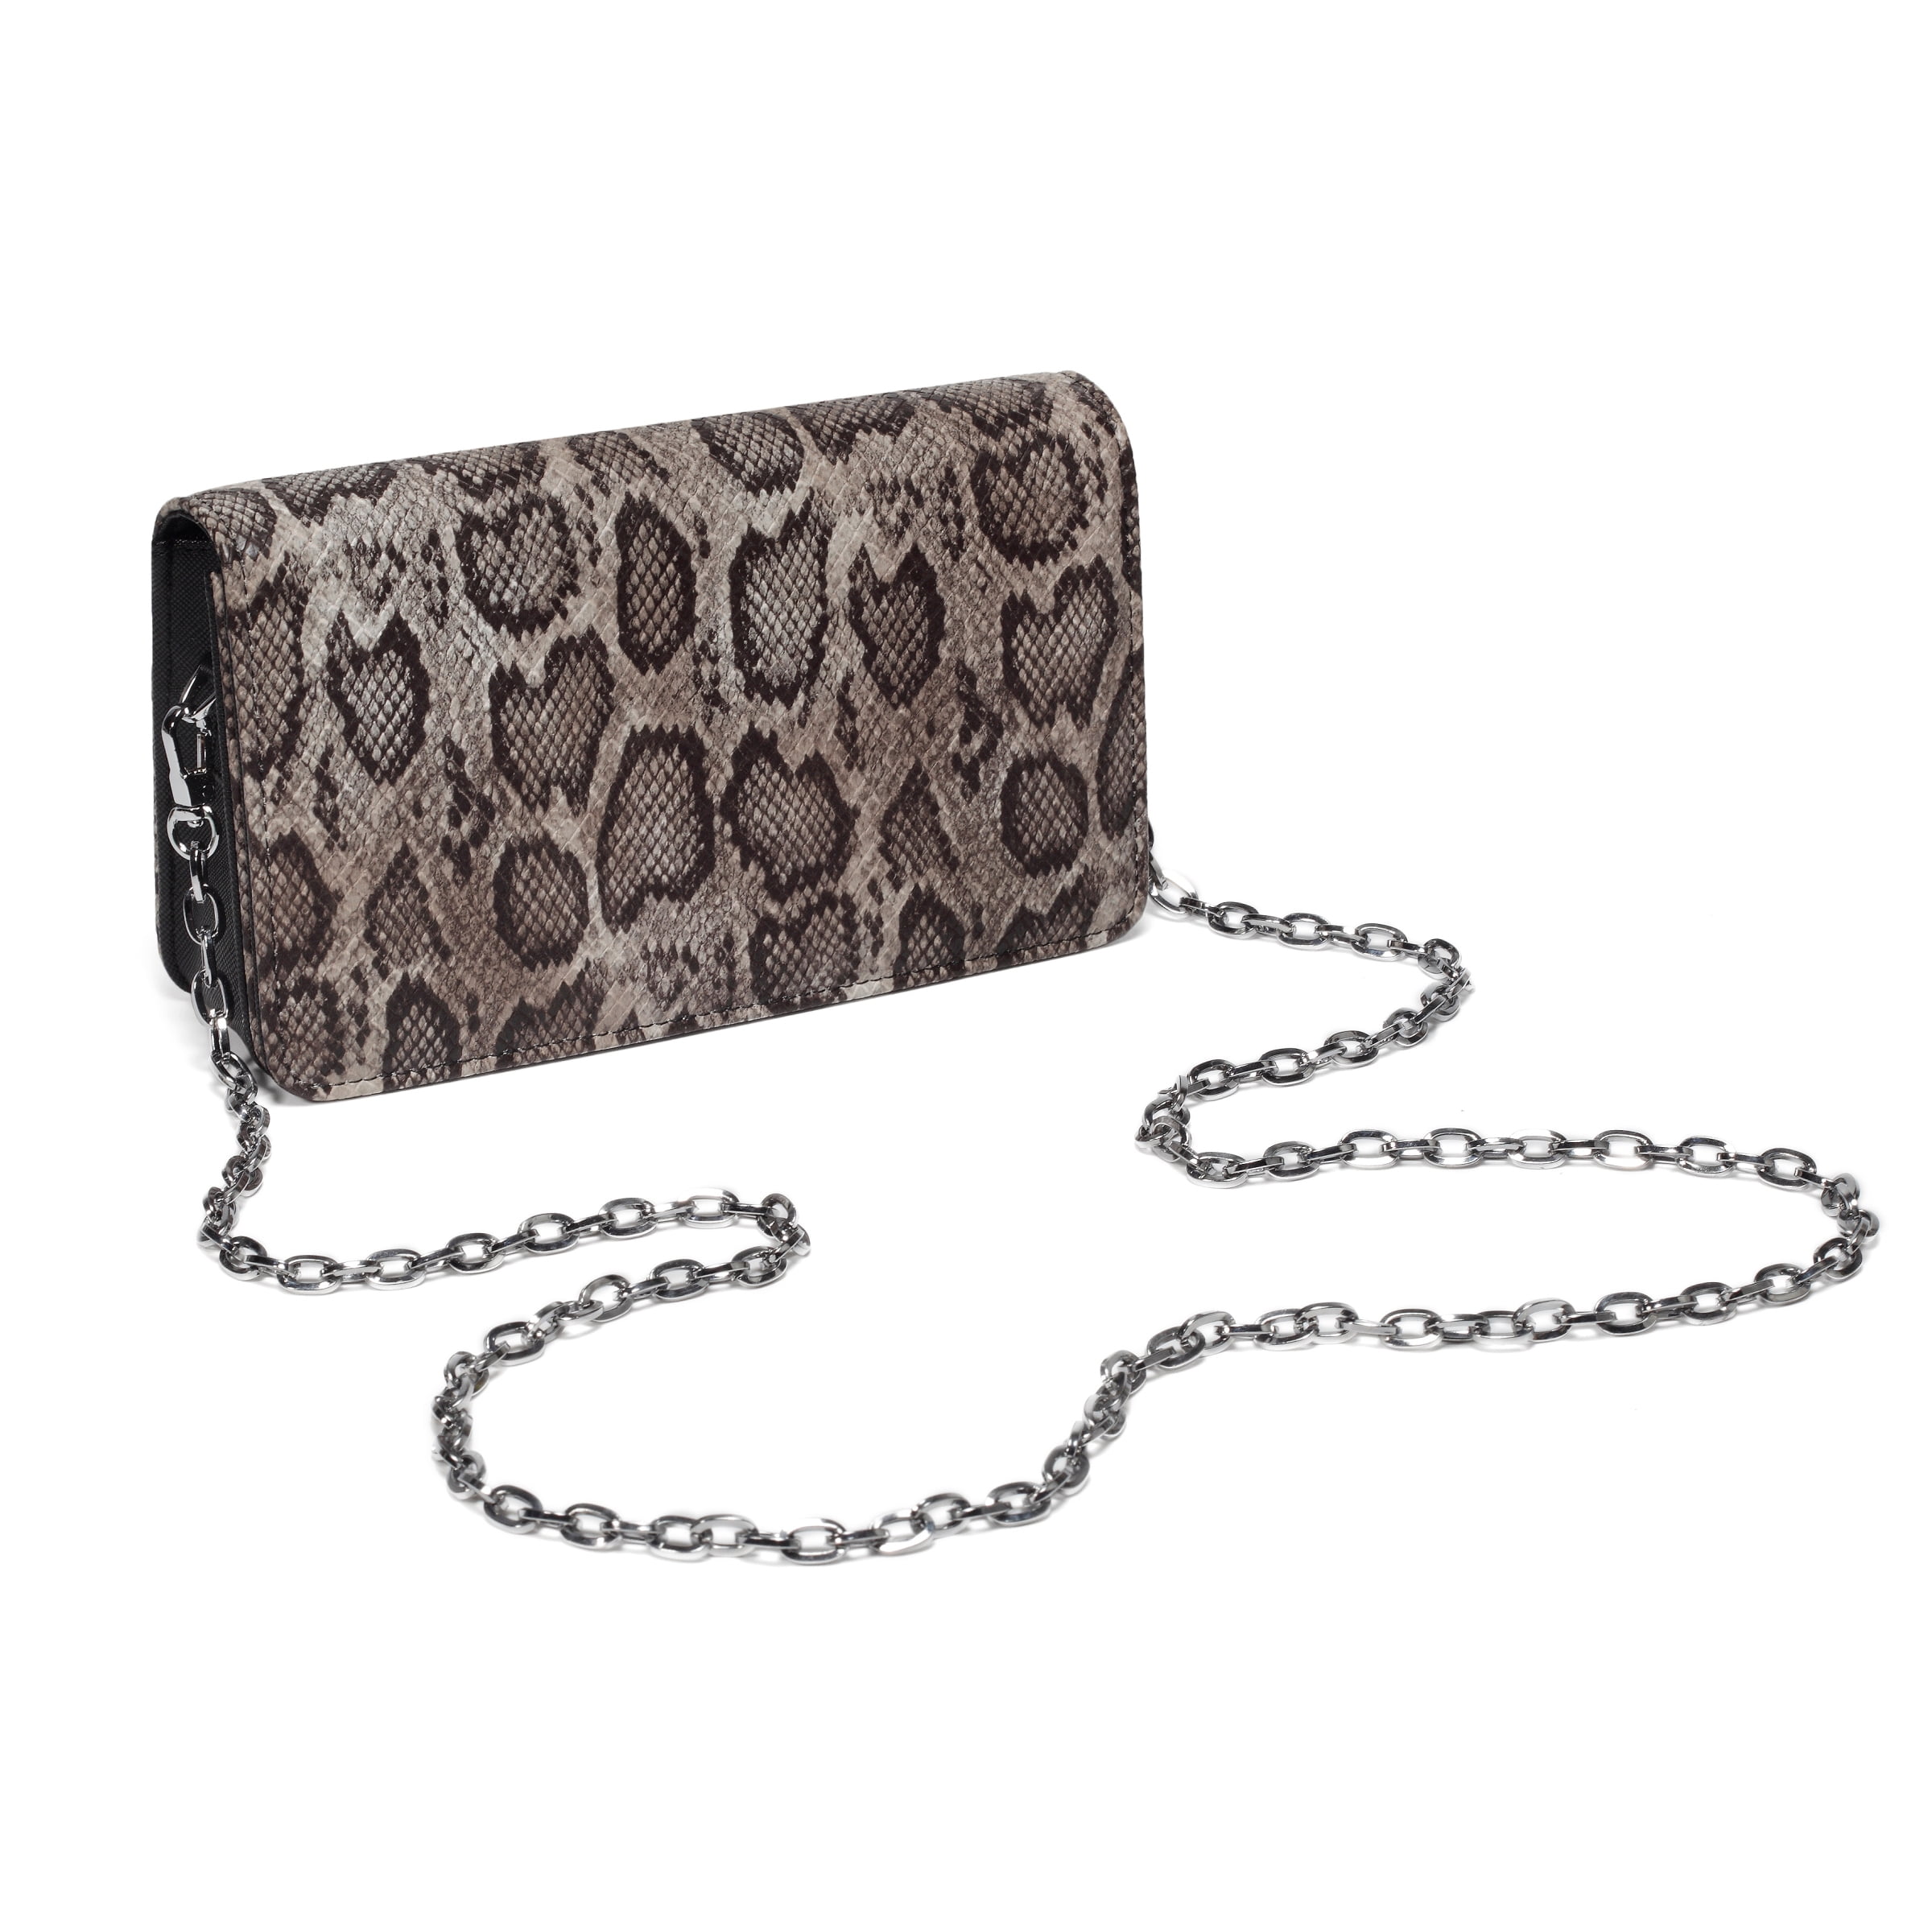 Daisy Rose Cross Body Bag - RFID Blocking with Credit Card Slots Clutch -PU Vegan Leather (Grey Snake)